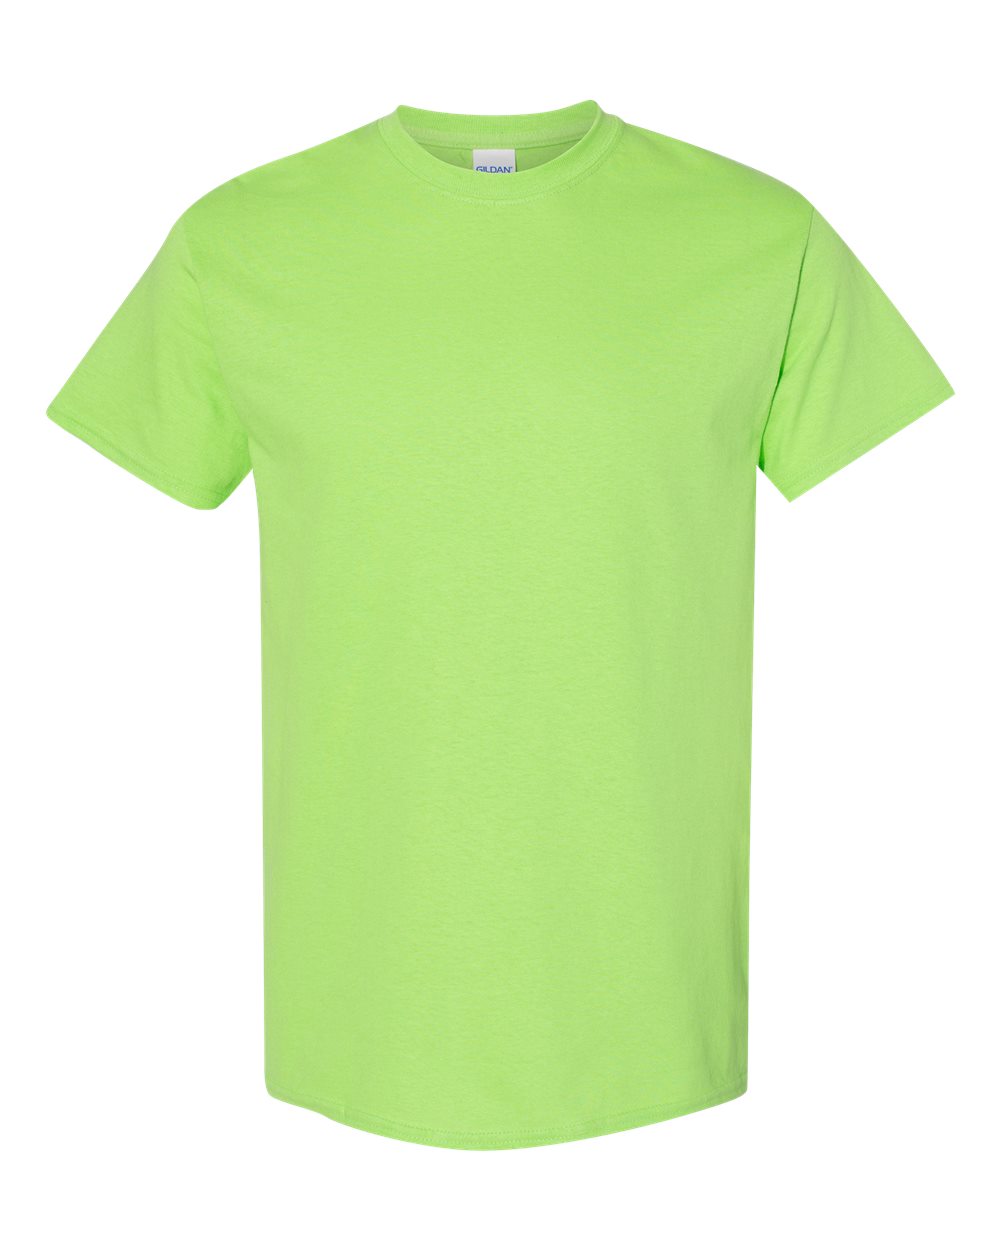 Dri-Fit Unisex Short Sleeve T-Shirt | Cheer